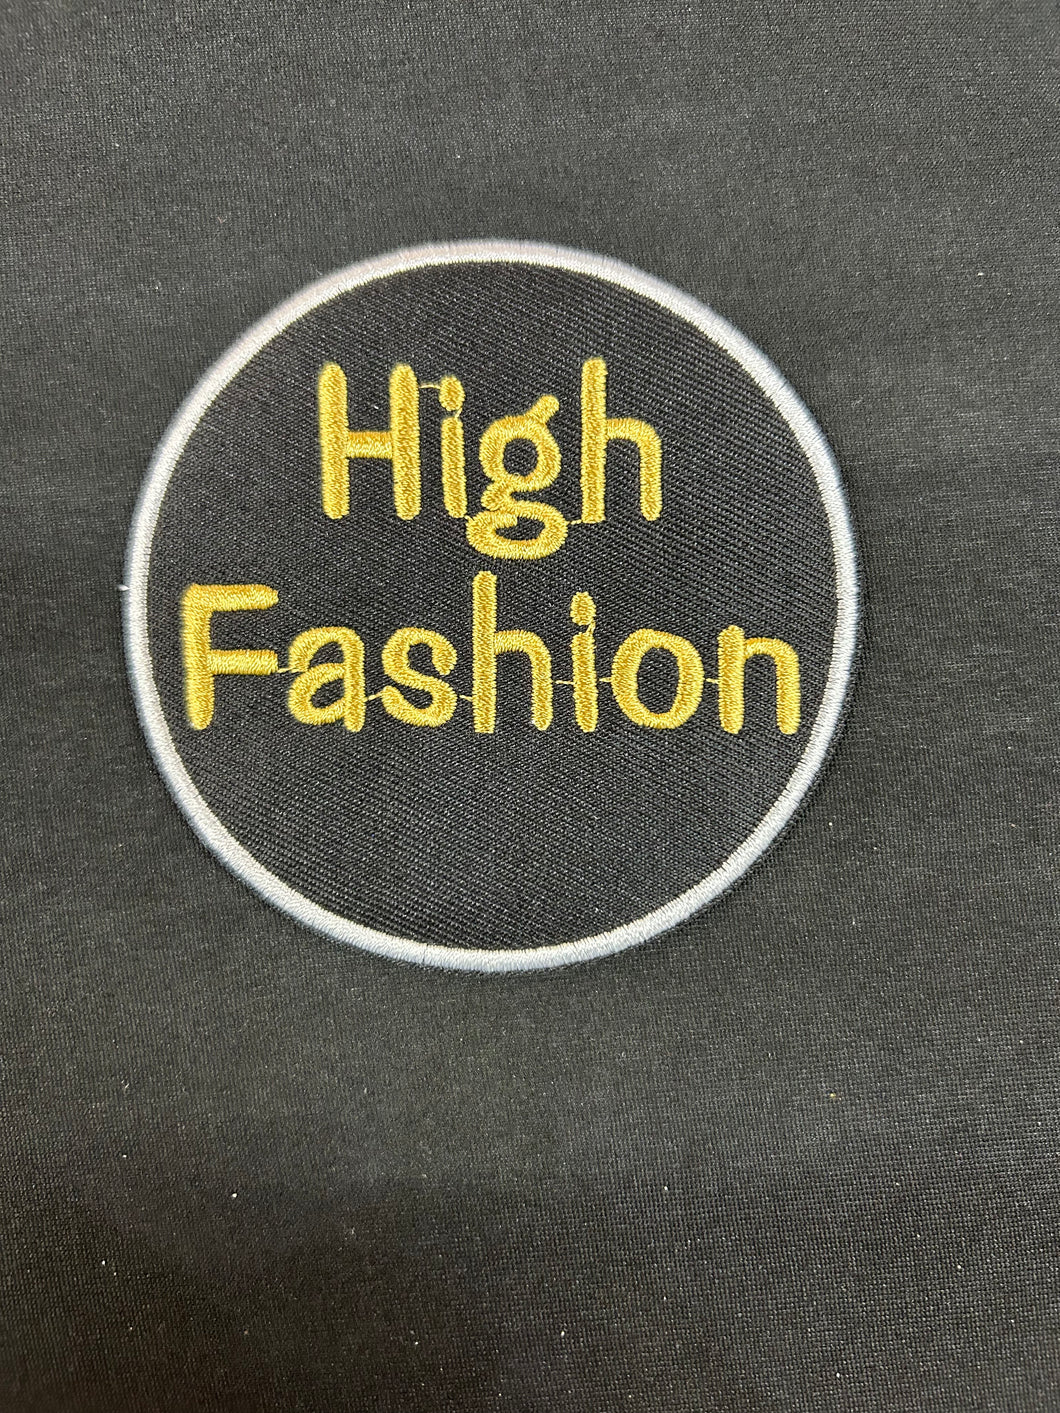 High fashion